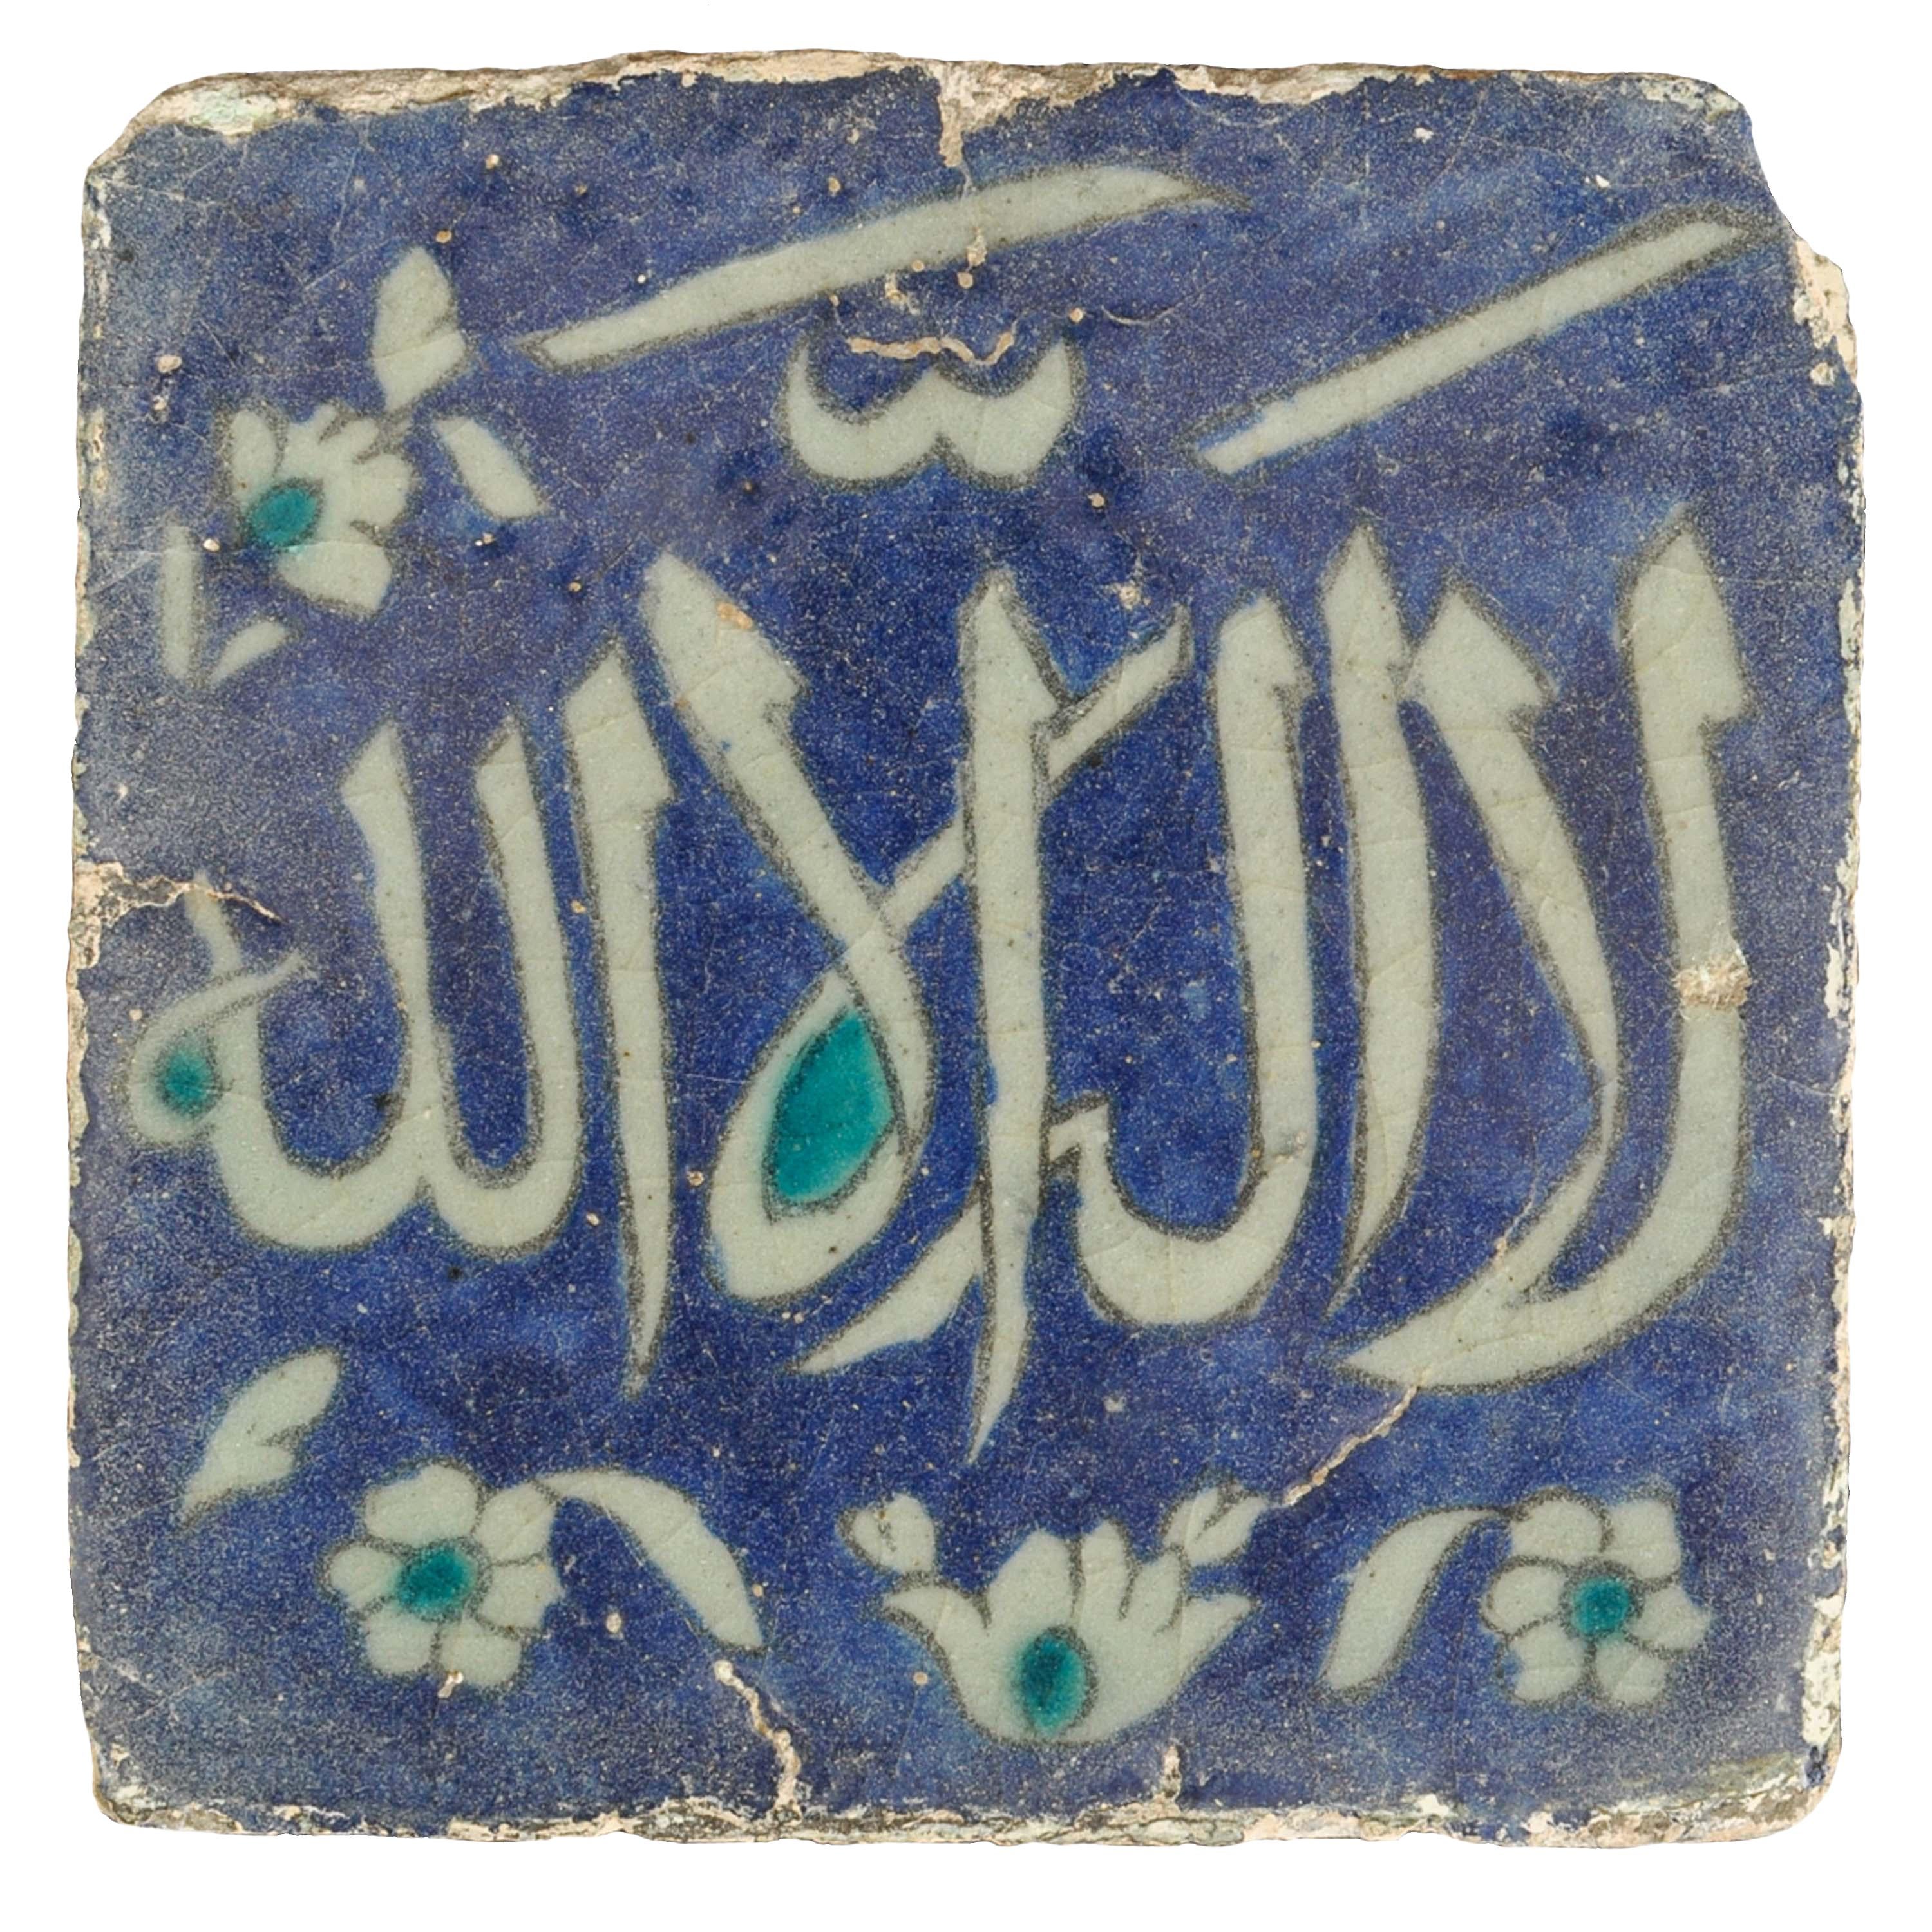 Glazed Ancient Antique Ottoman Islamic Calligraphy Iznik Pottery Tile Turkey 1580